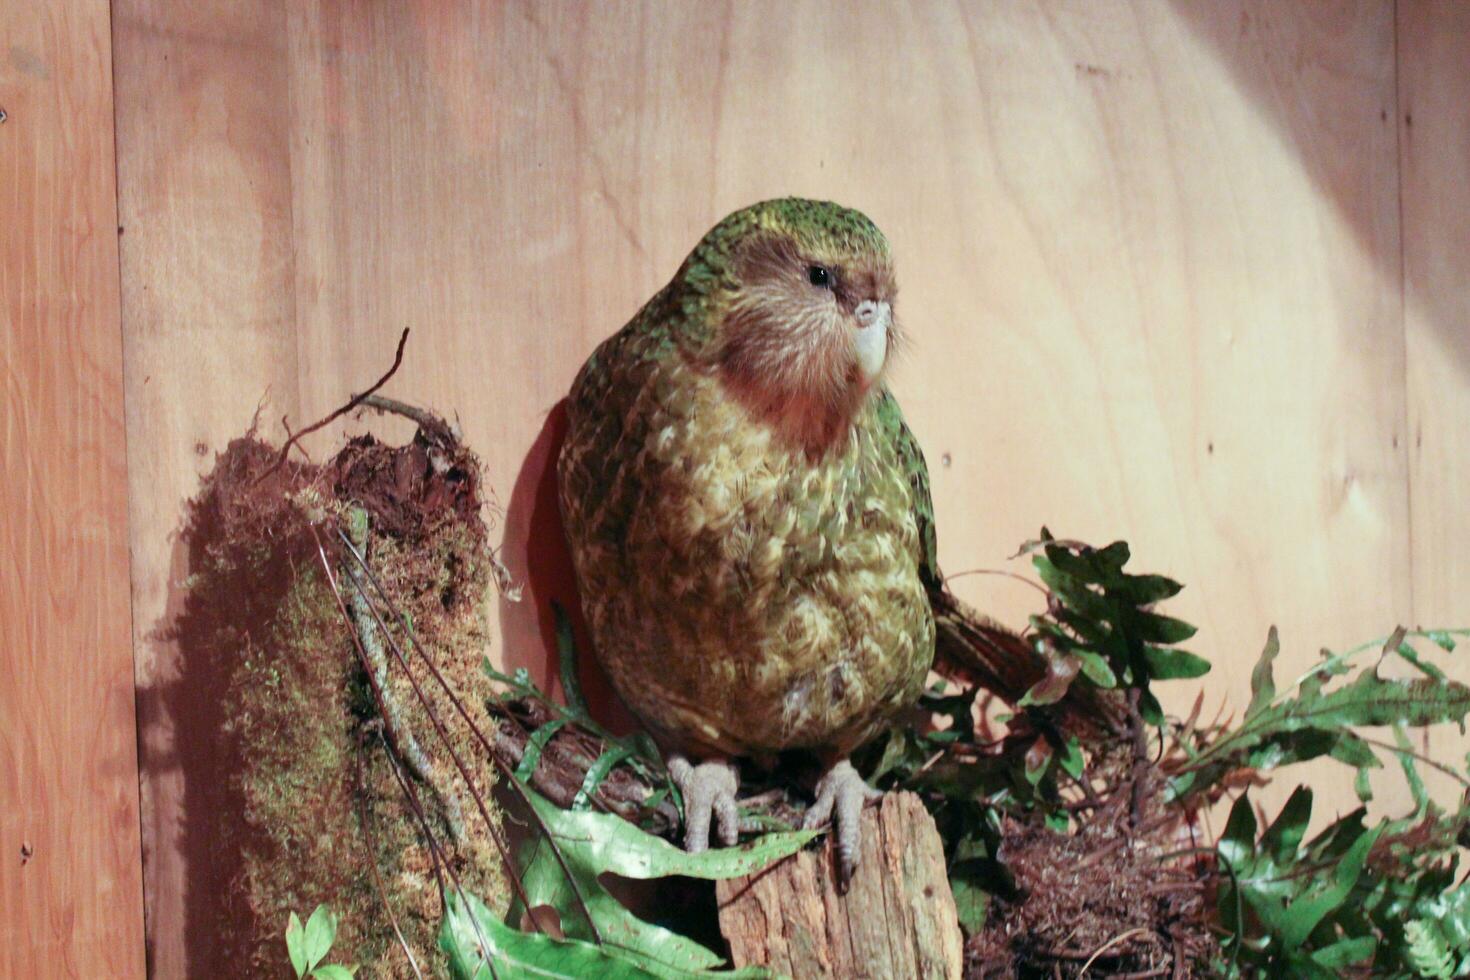 Kakapo Endangered Night Parrot of New Zealand photo